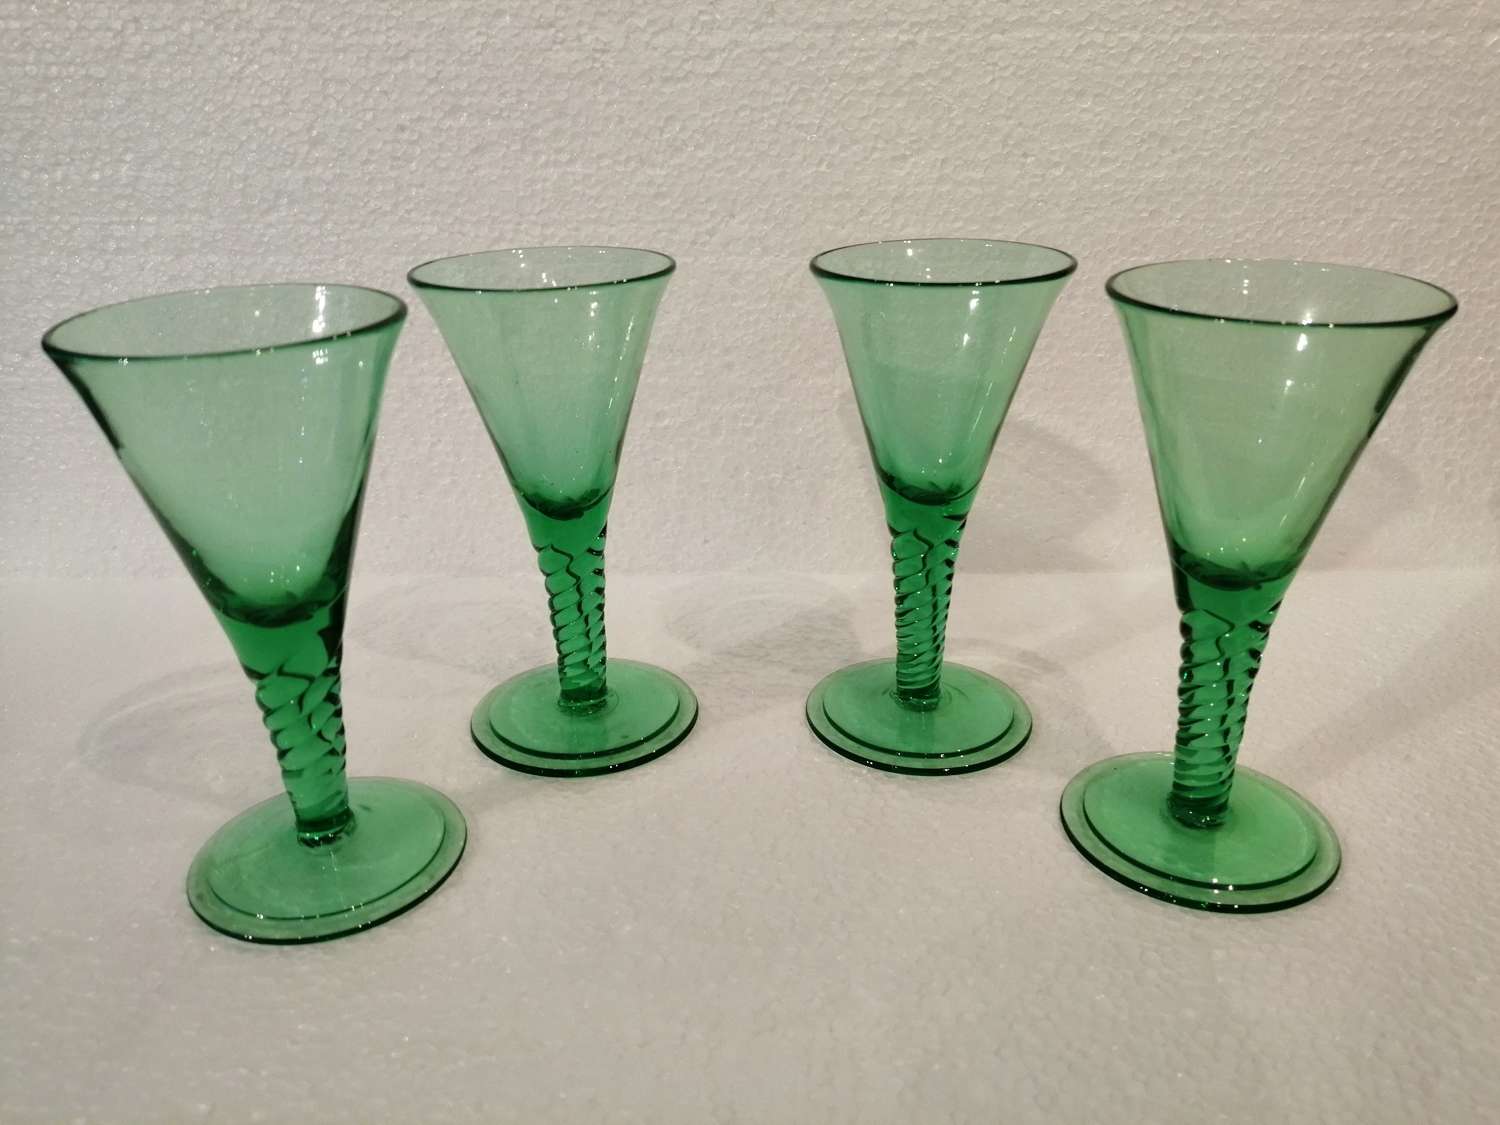 Four 19th century emerald green wine glasses